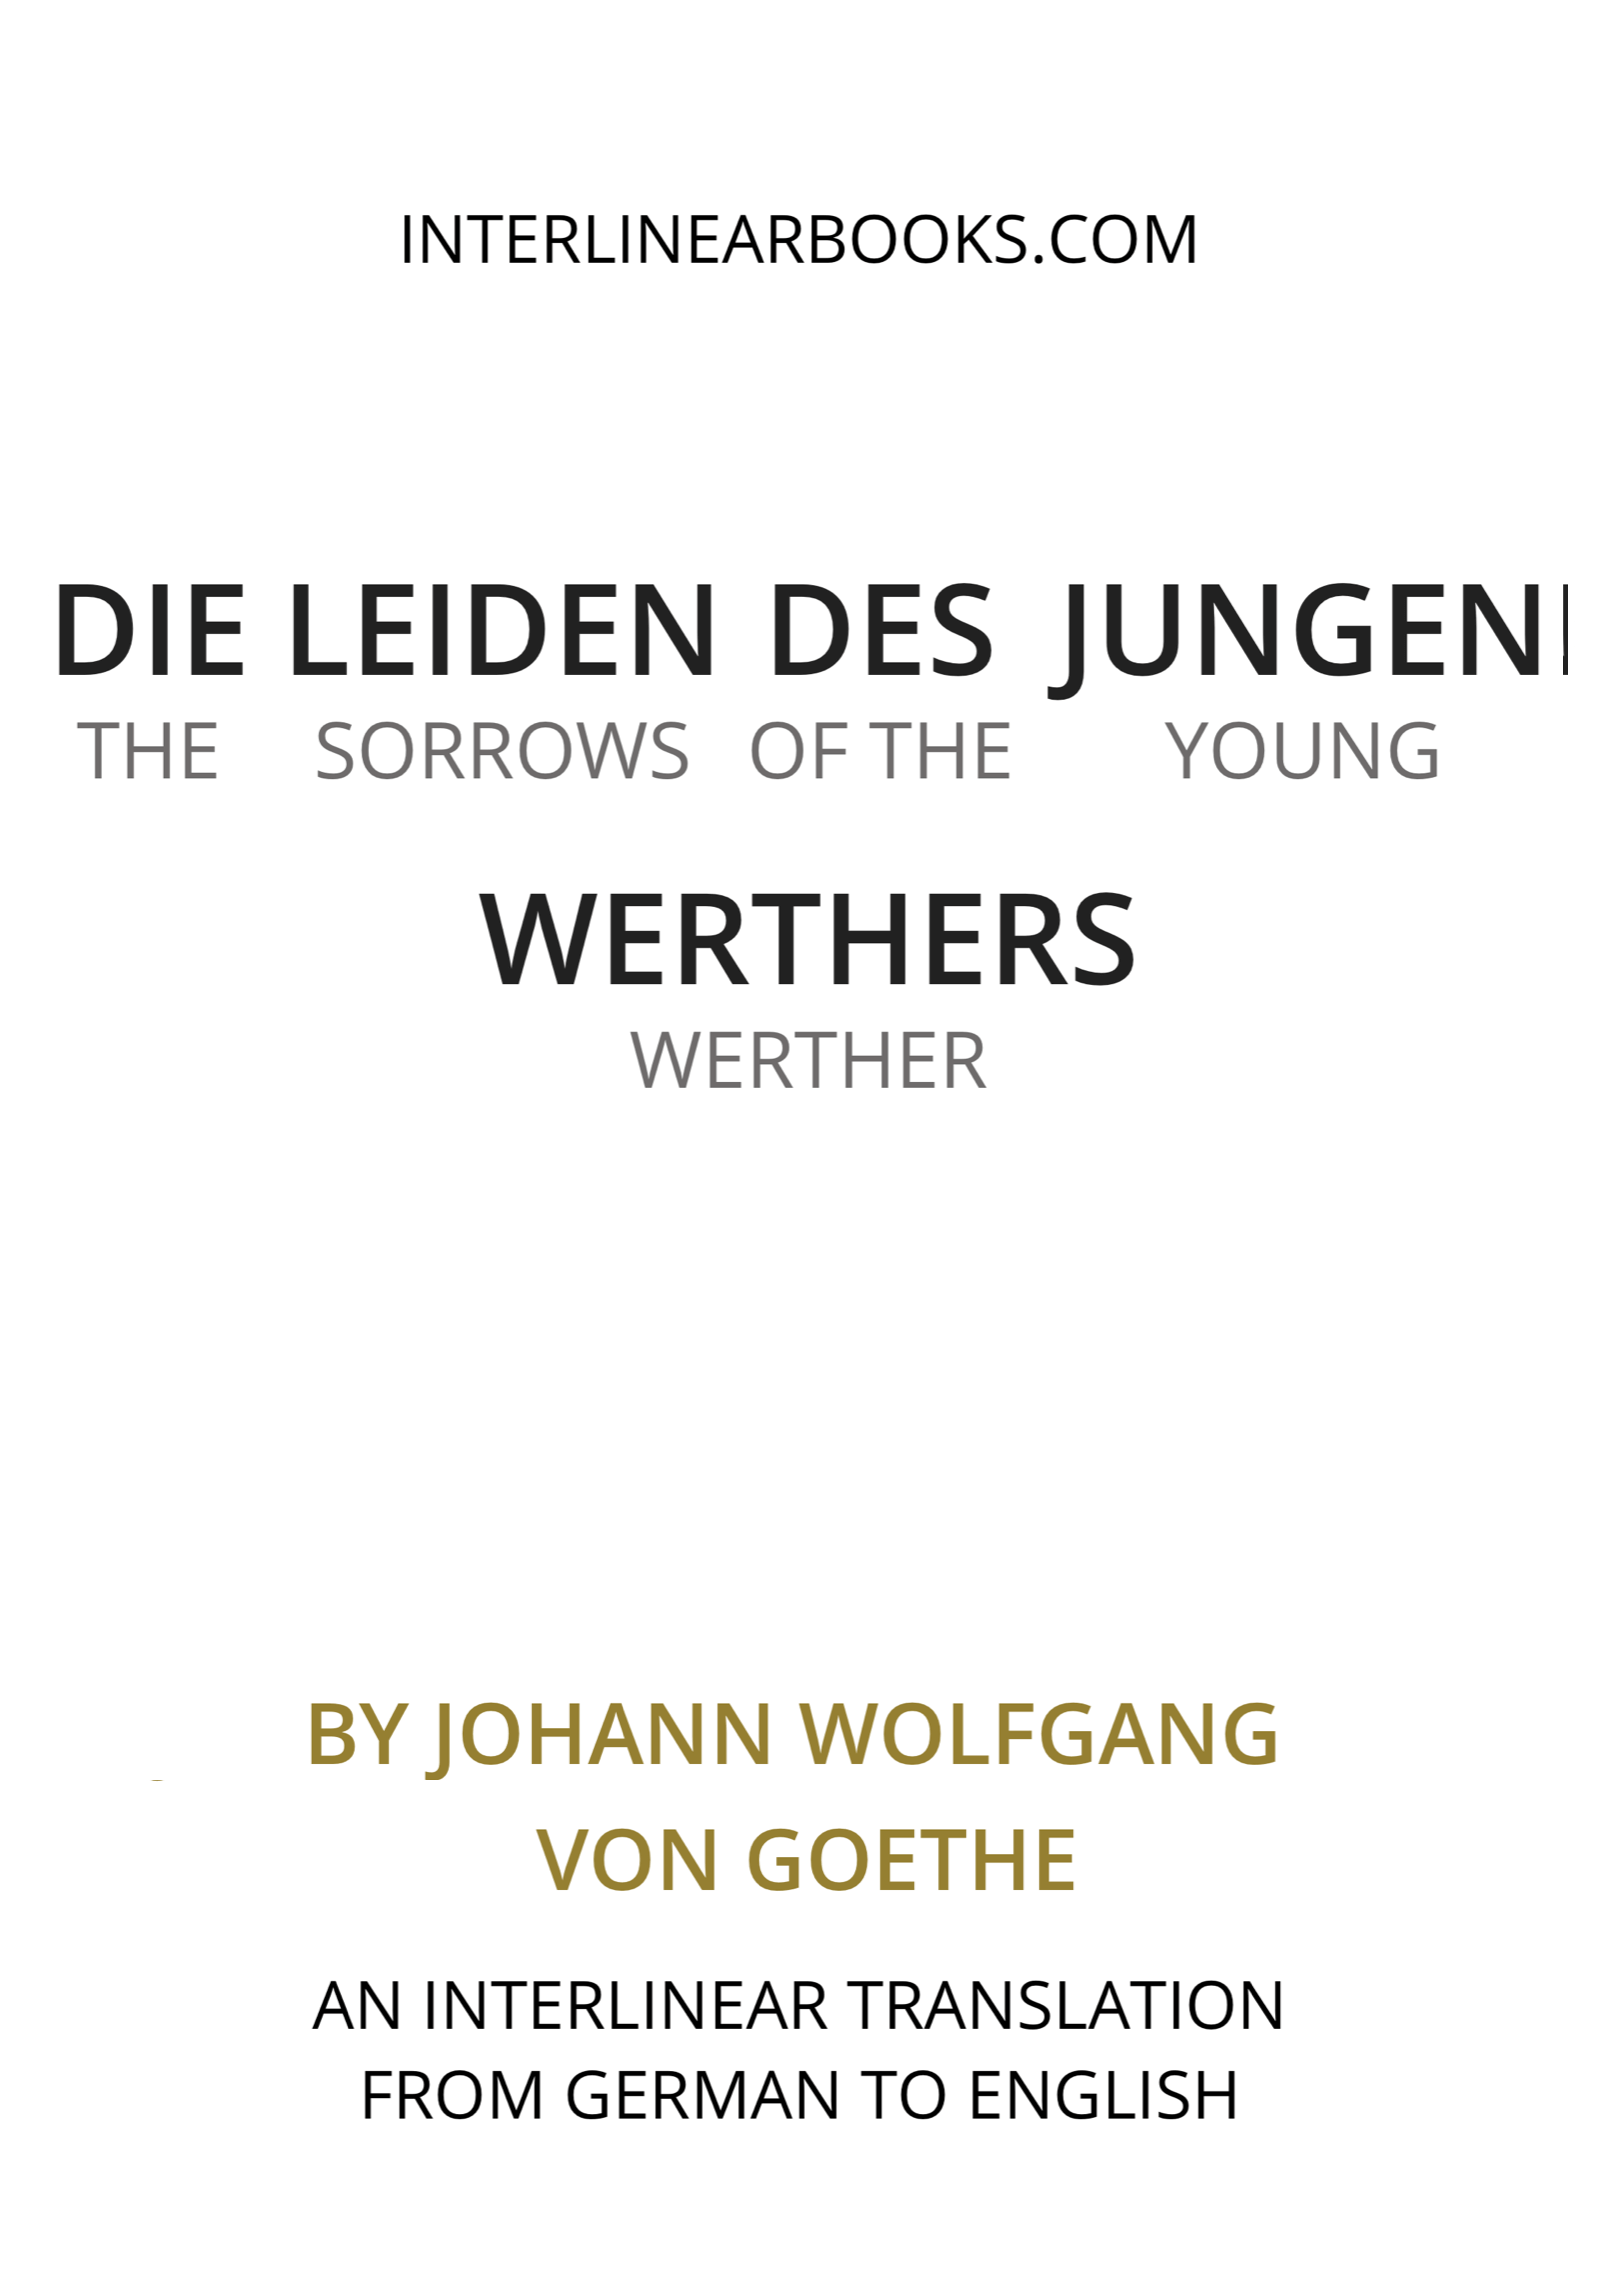 German book: Die Leiden des jungen Werthers / The Sorrows of Young Werther